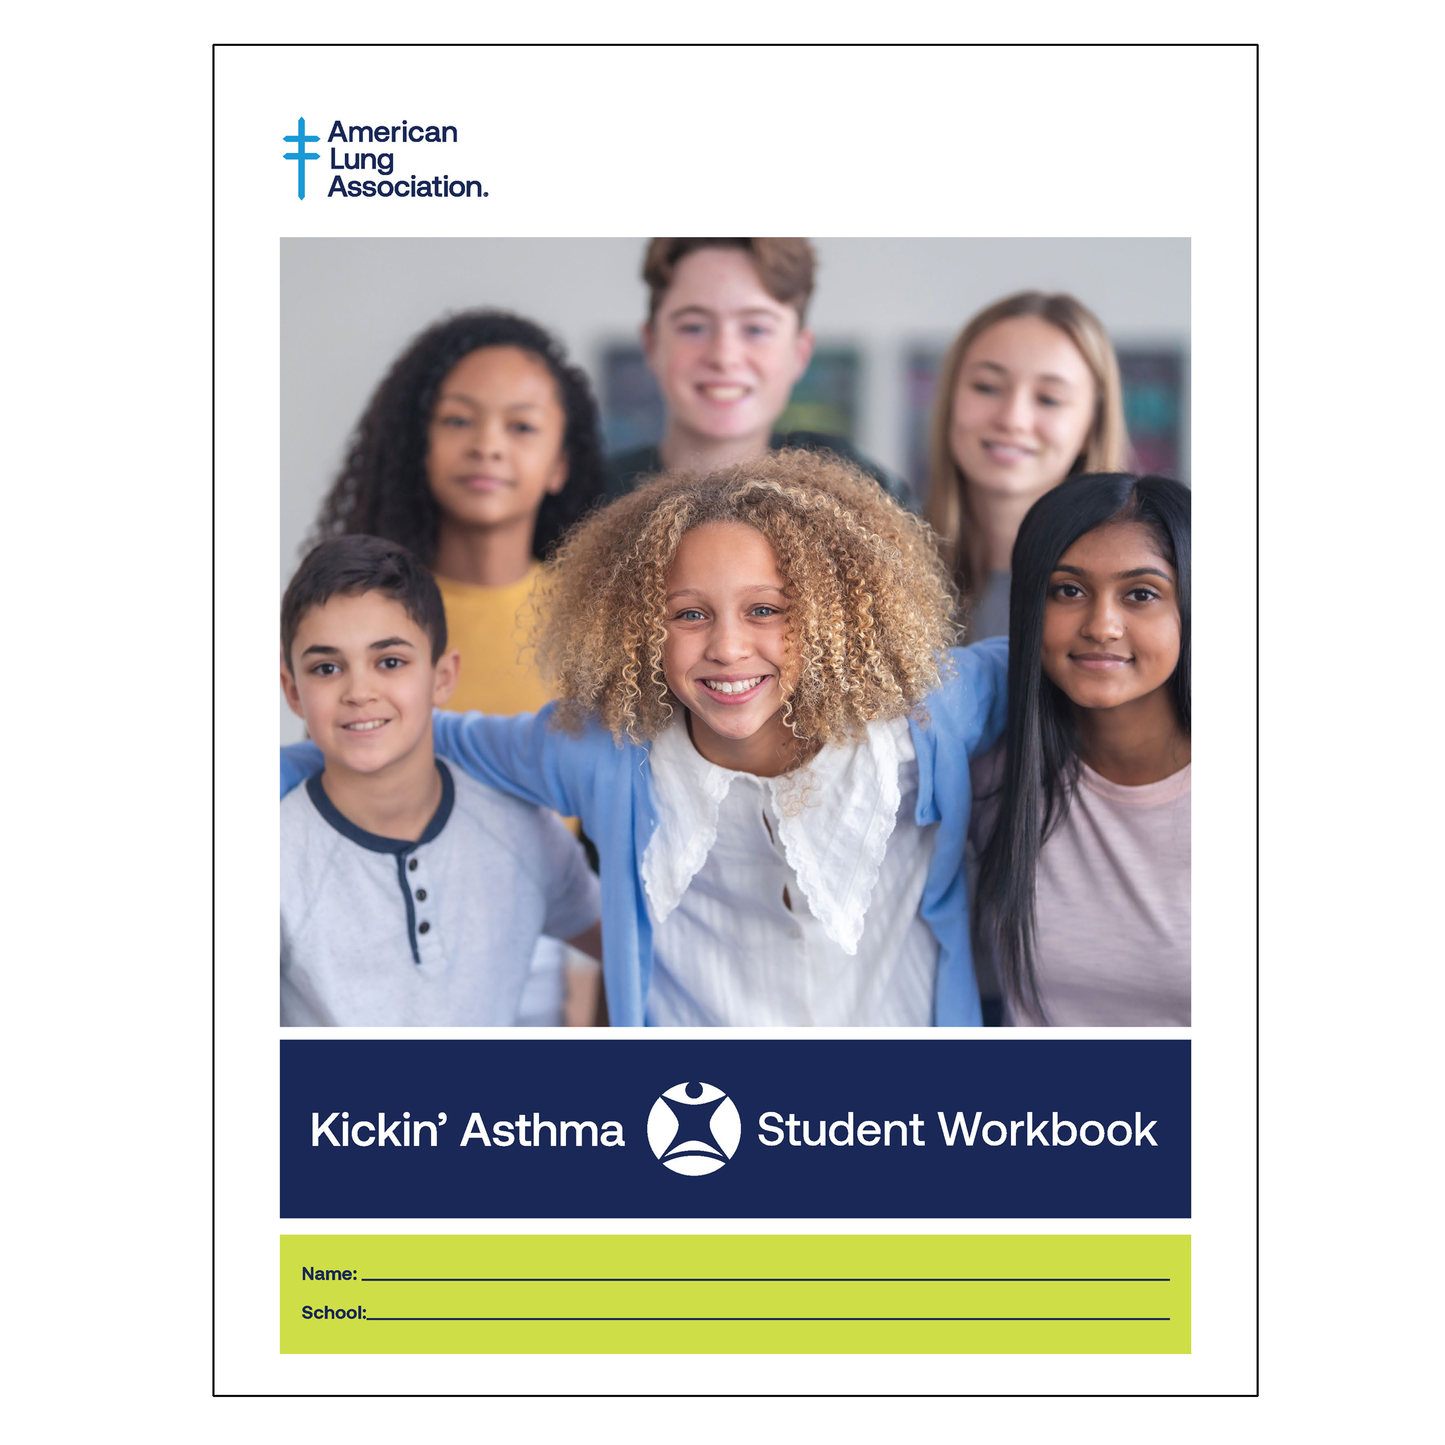 Kickin' Asthma Student Workbook